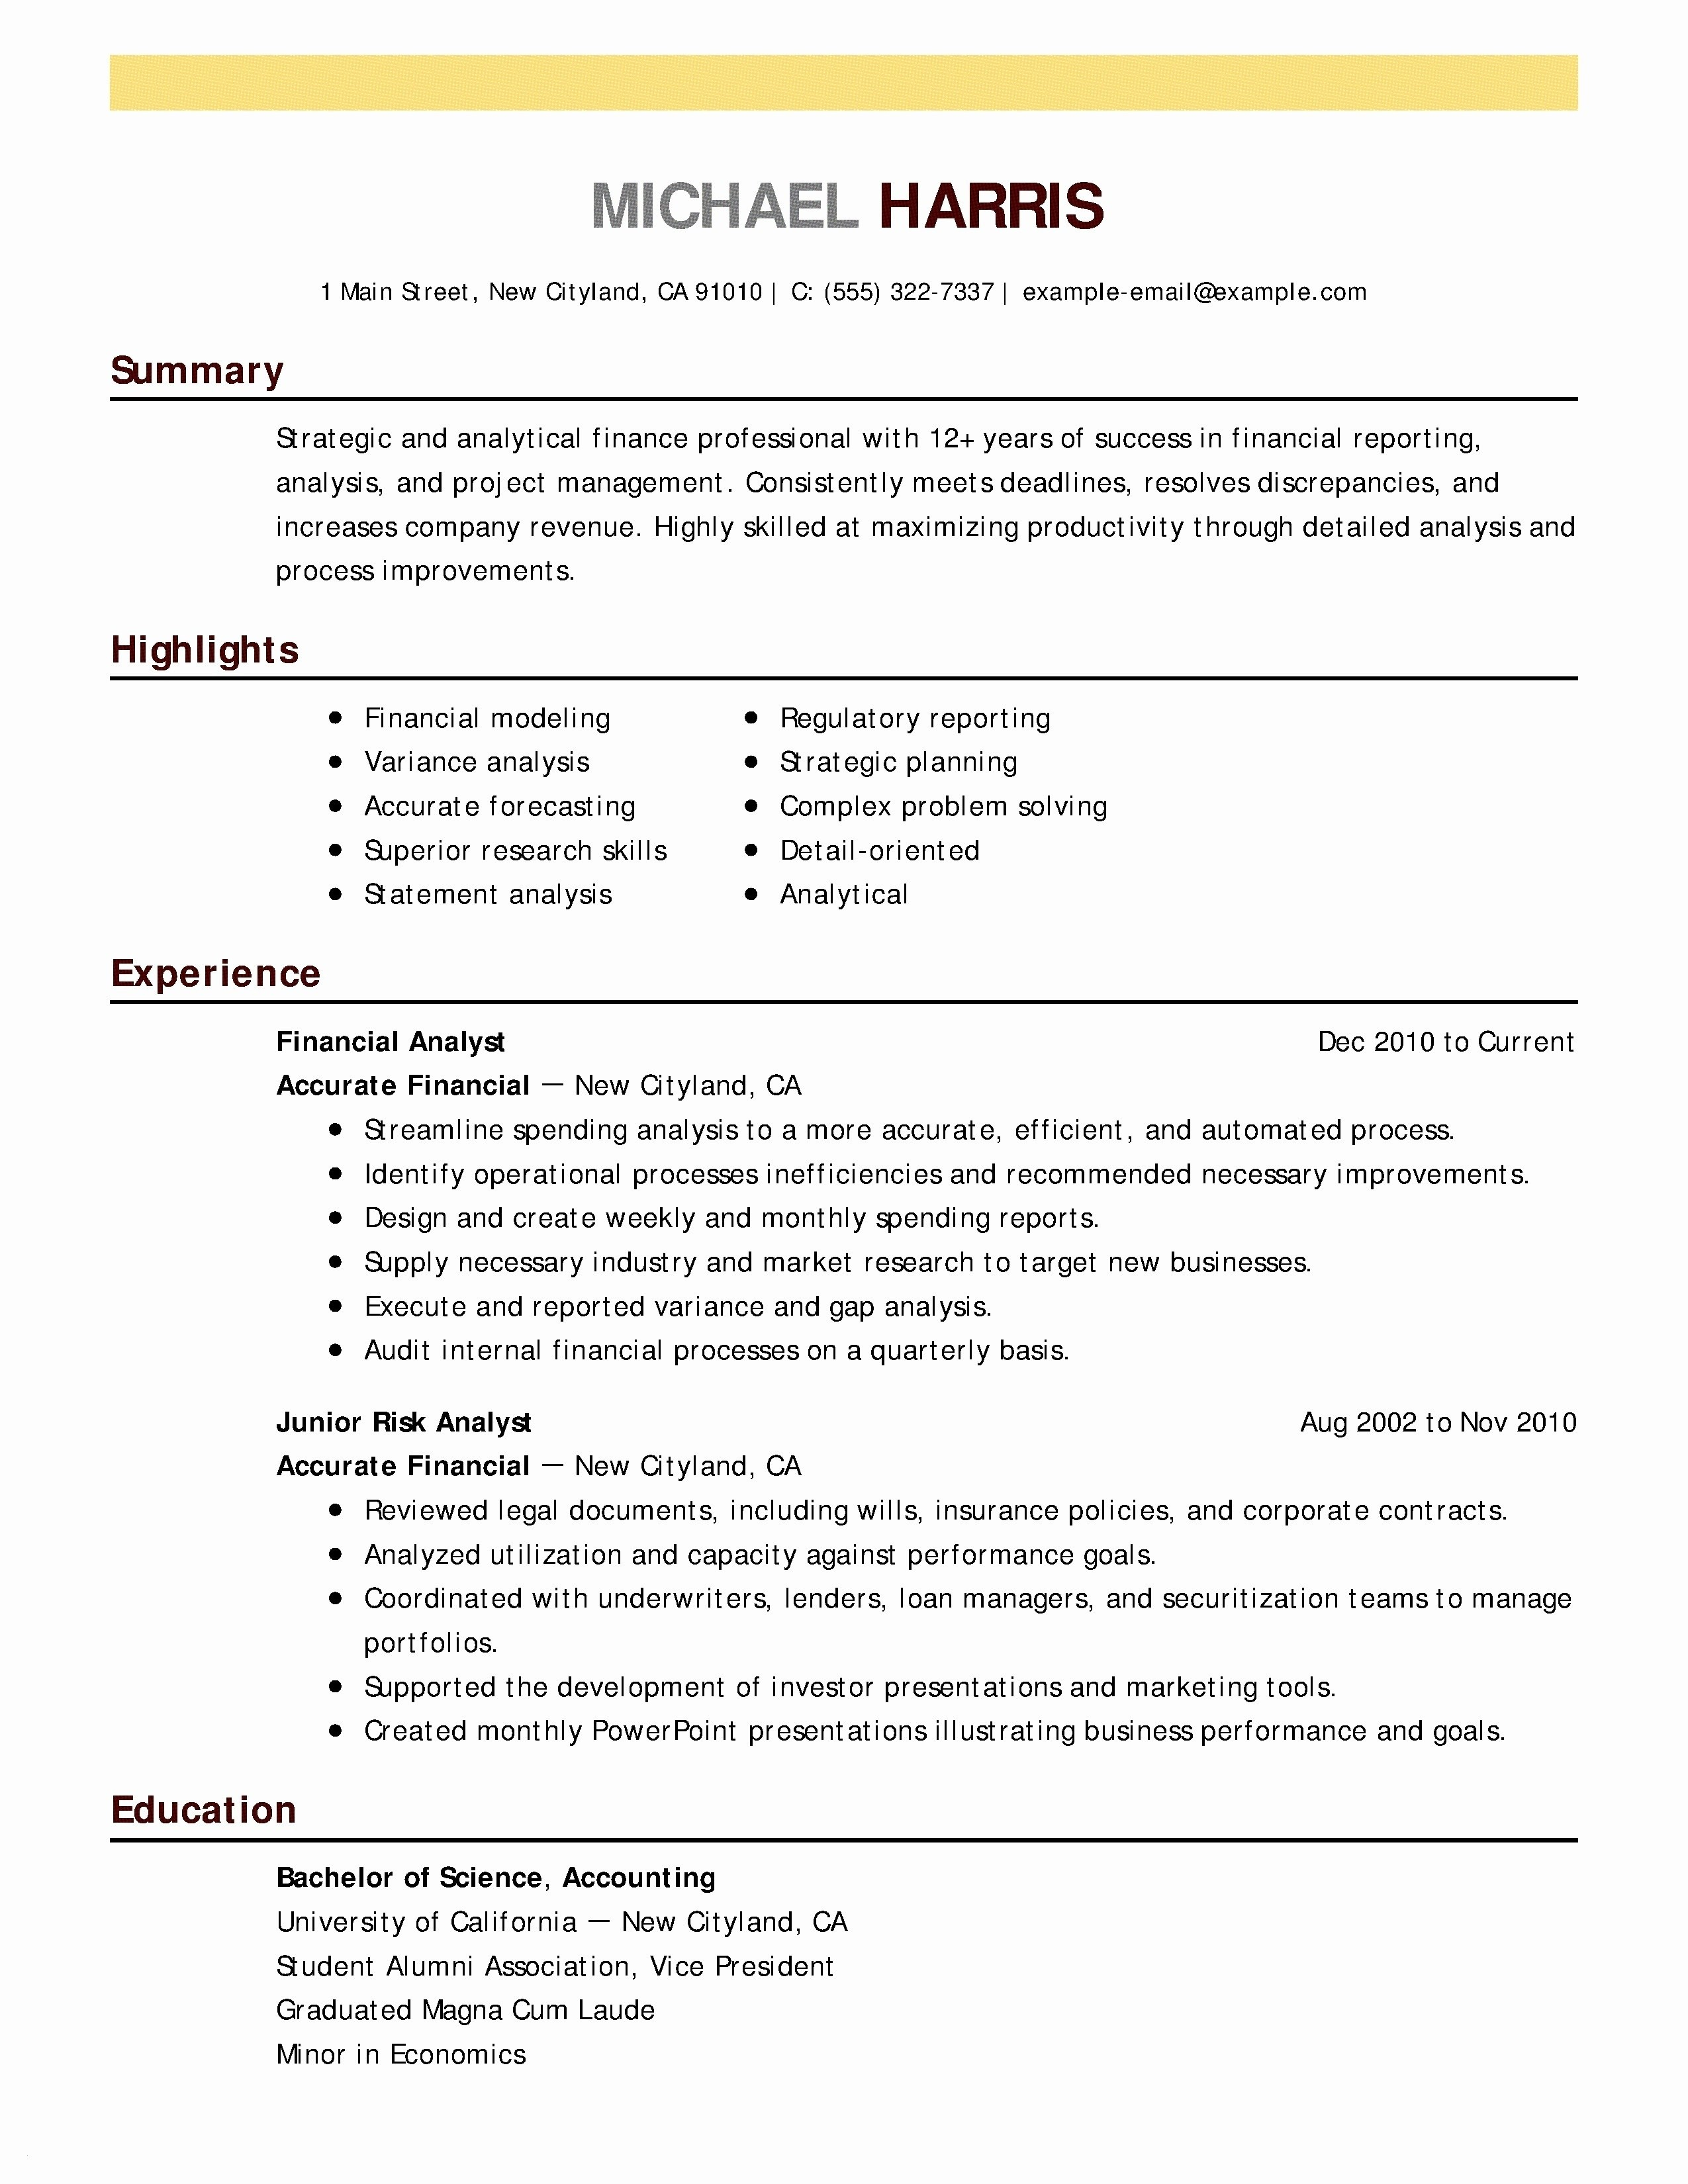 Resume Objective Examples  Basic Resume Sample For Students New Student Resume Objective